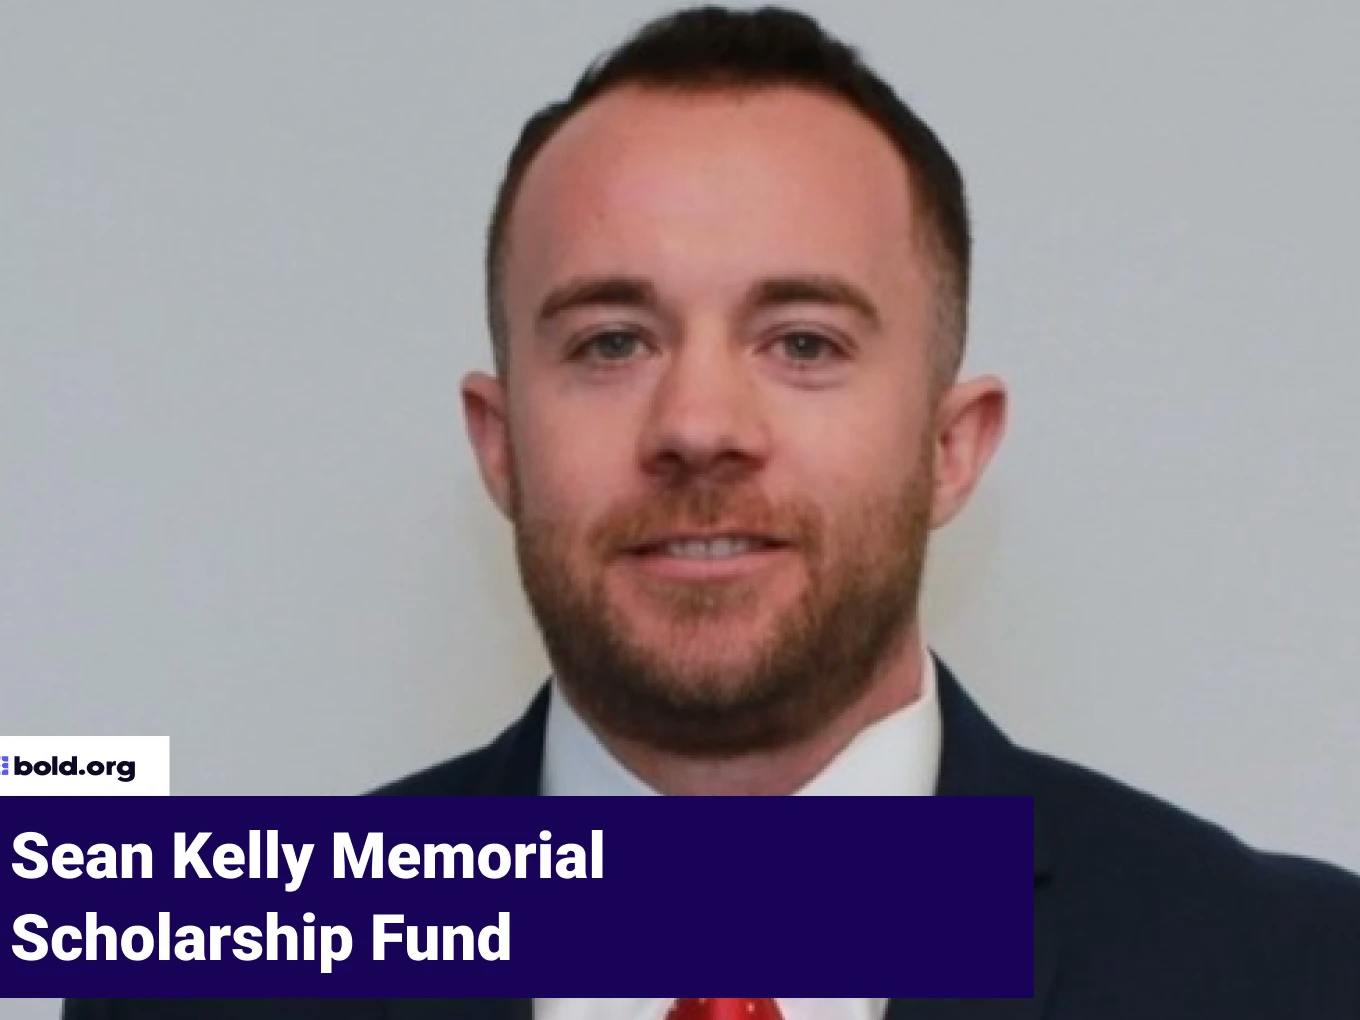 Sean Kelly Memorial Scholarship Fund